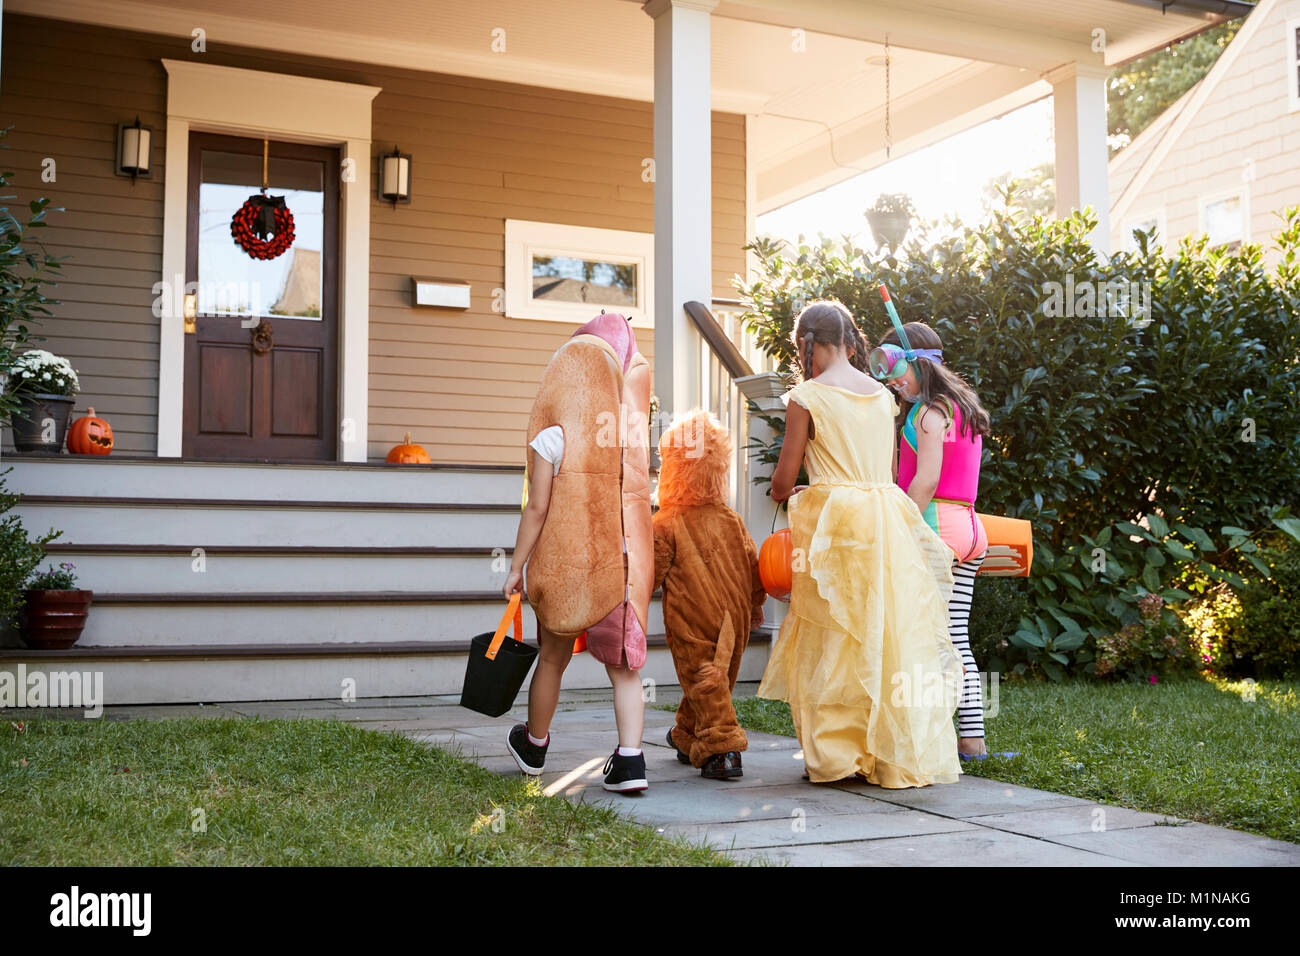 Enfants vêtus de costumes d'Halloween trick or treating Banque D'Images